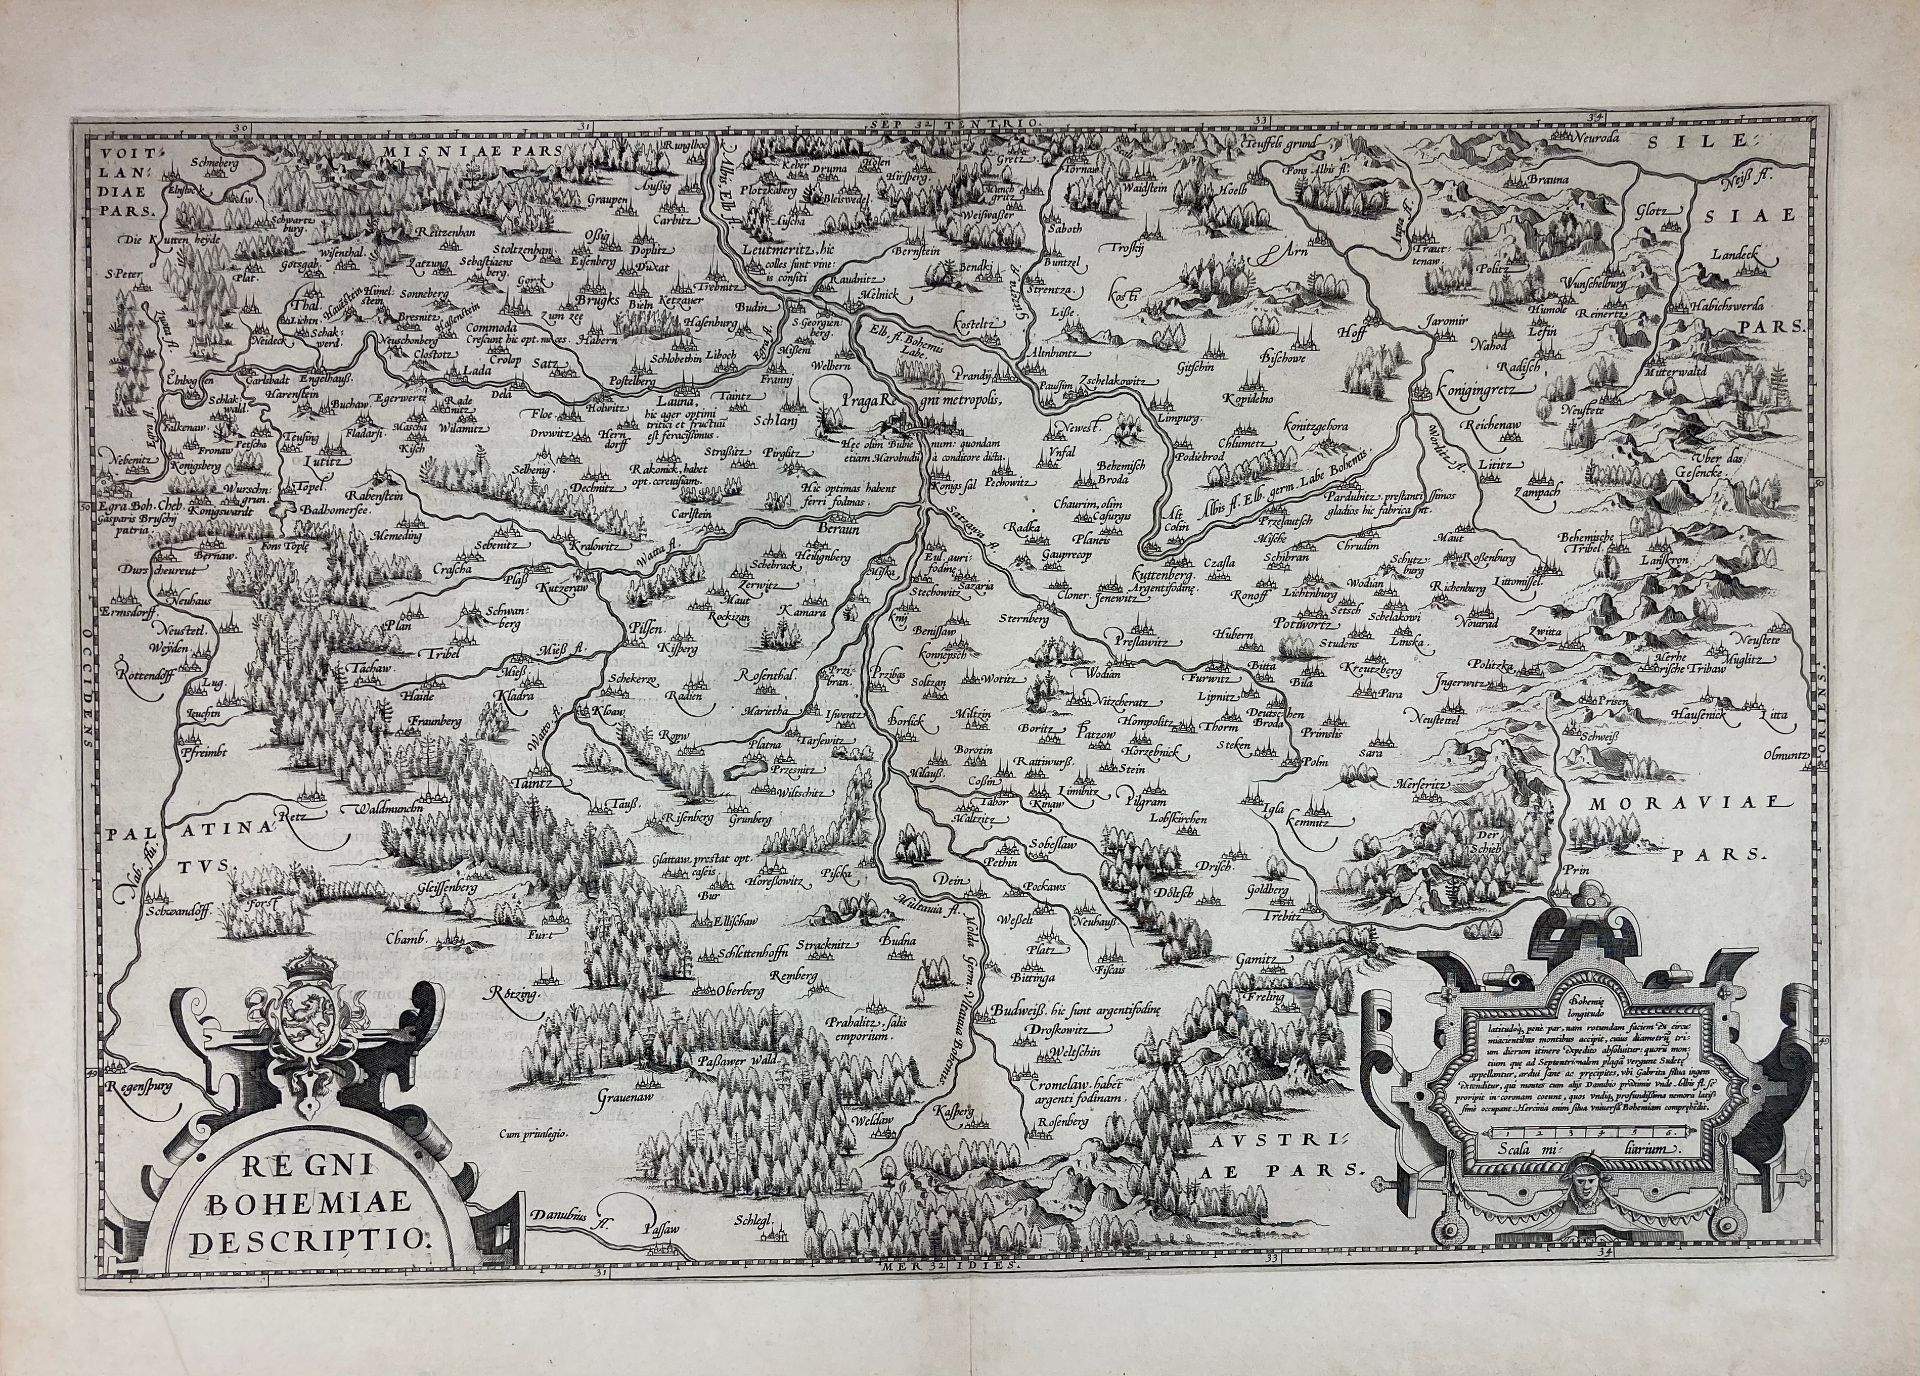 EASTERN EUROPE -- "REGNI BOHEMIÆ DESCRIPTIO". (Antwerp, A. Ortelius, 1570). Plain engr. map